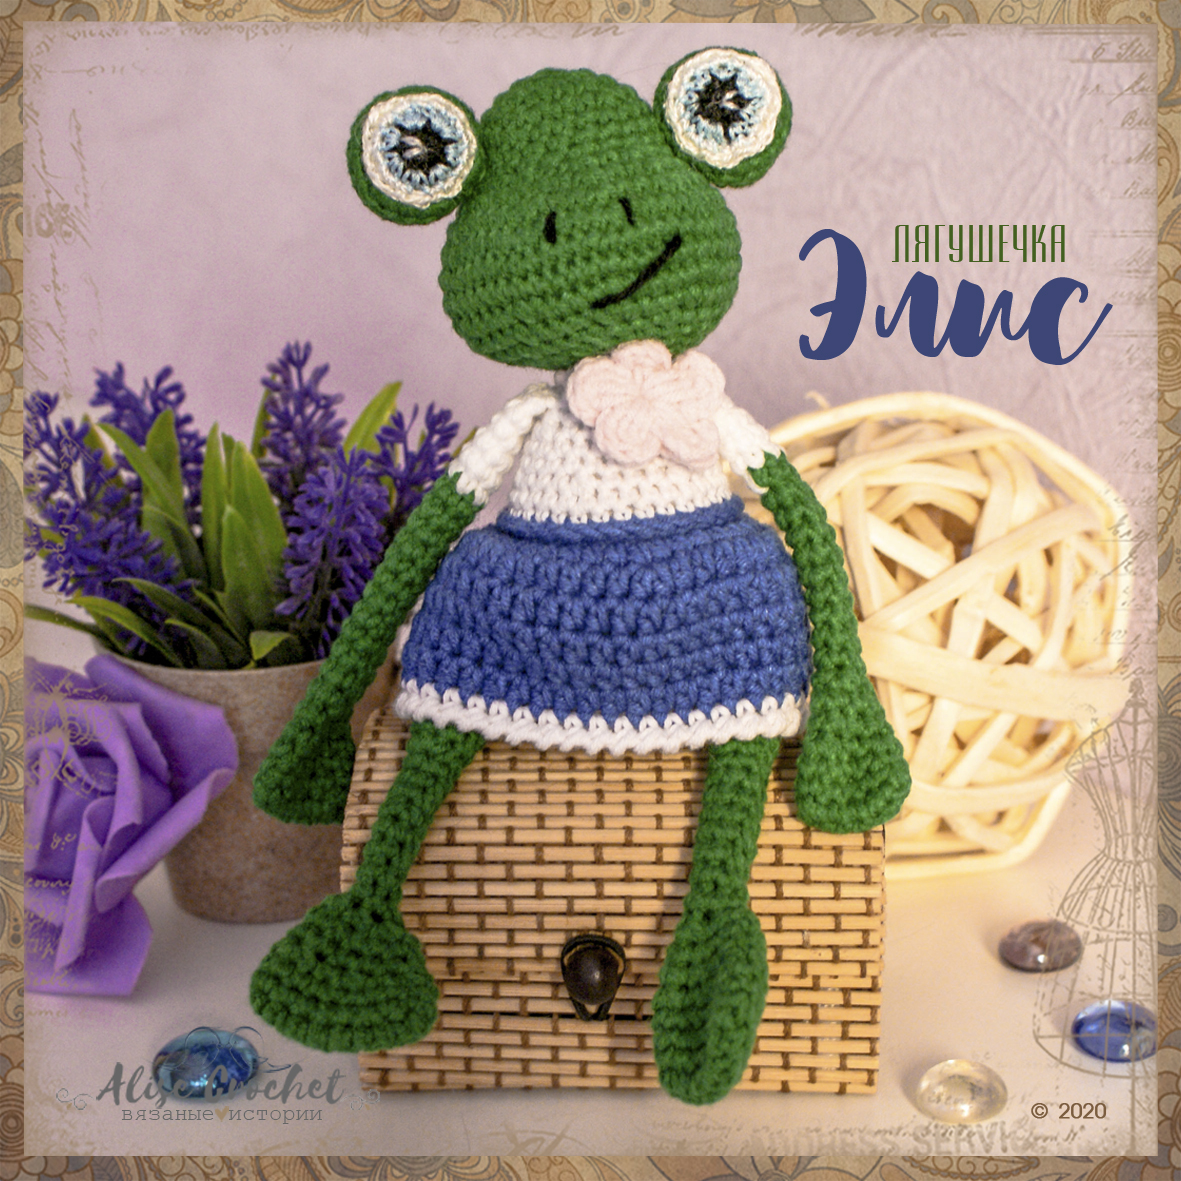 лягушка элис вязаная крючком игрушка frog alice crochet toy amigurumi lenki...